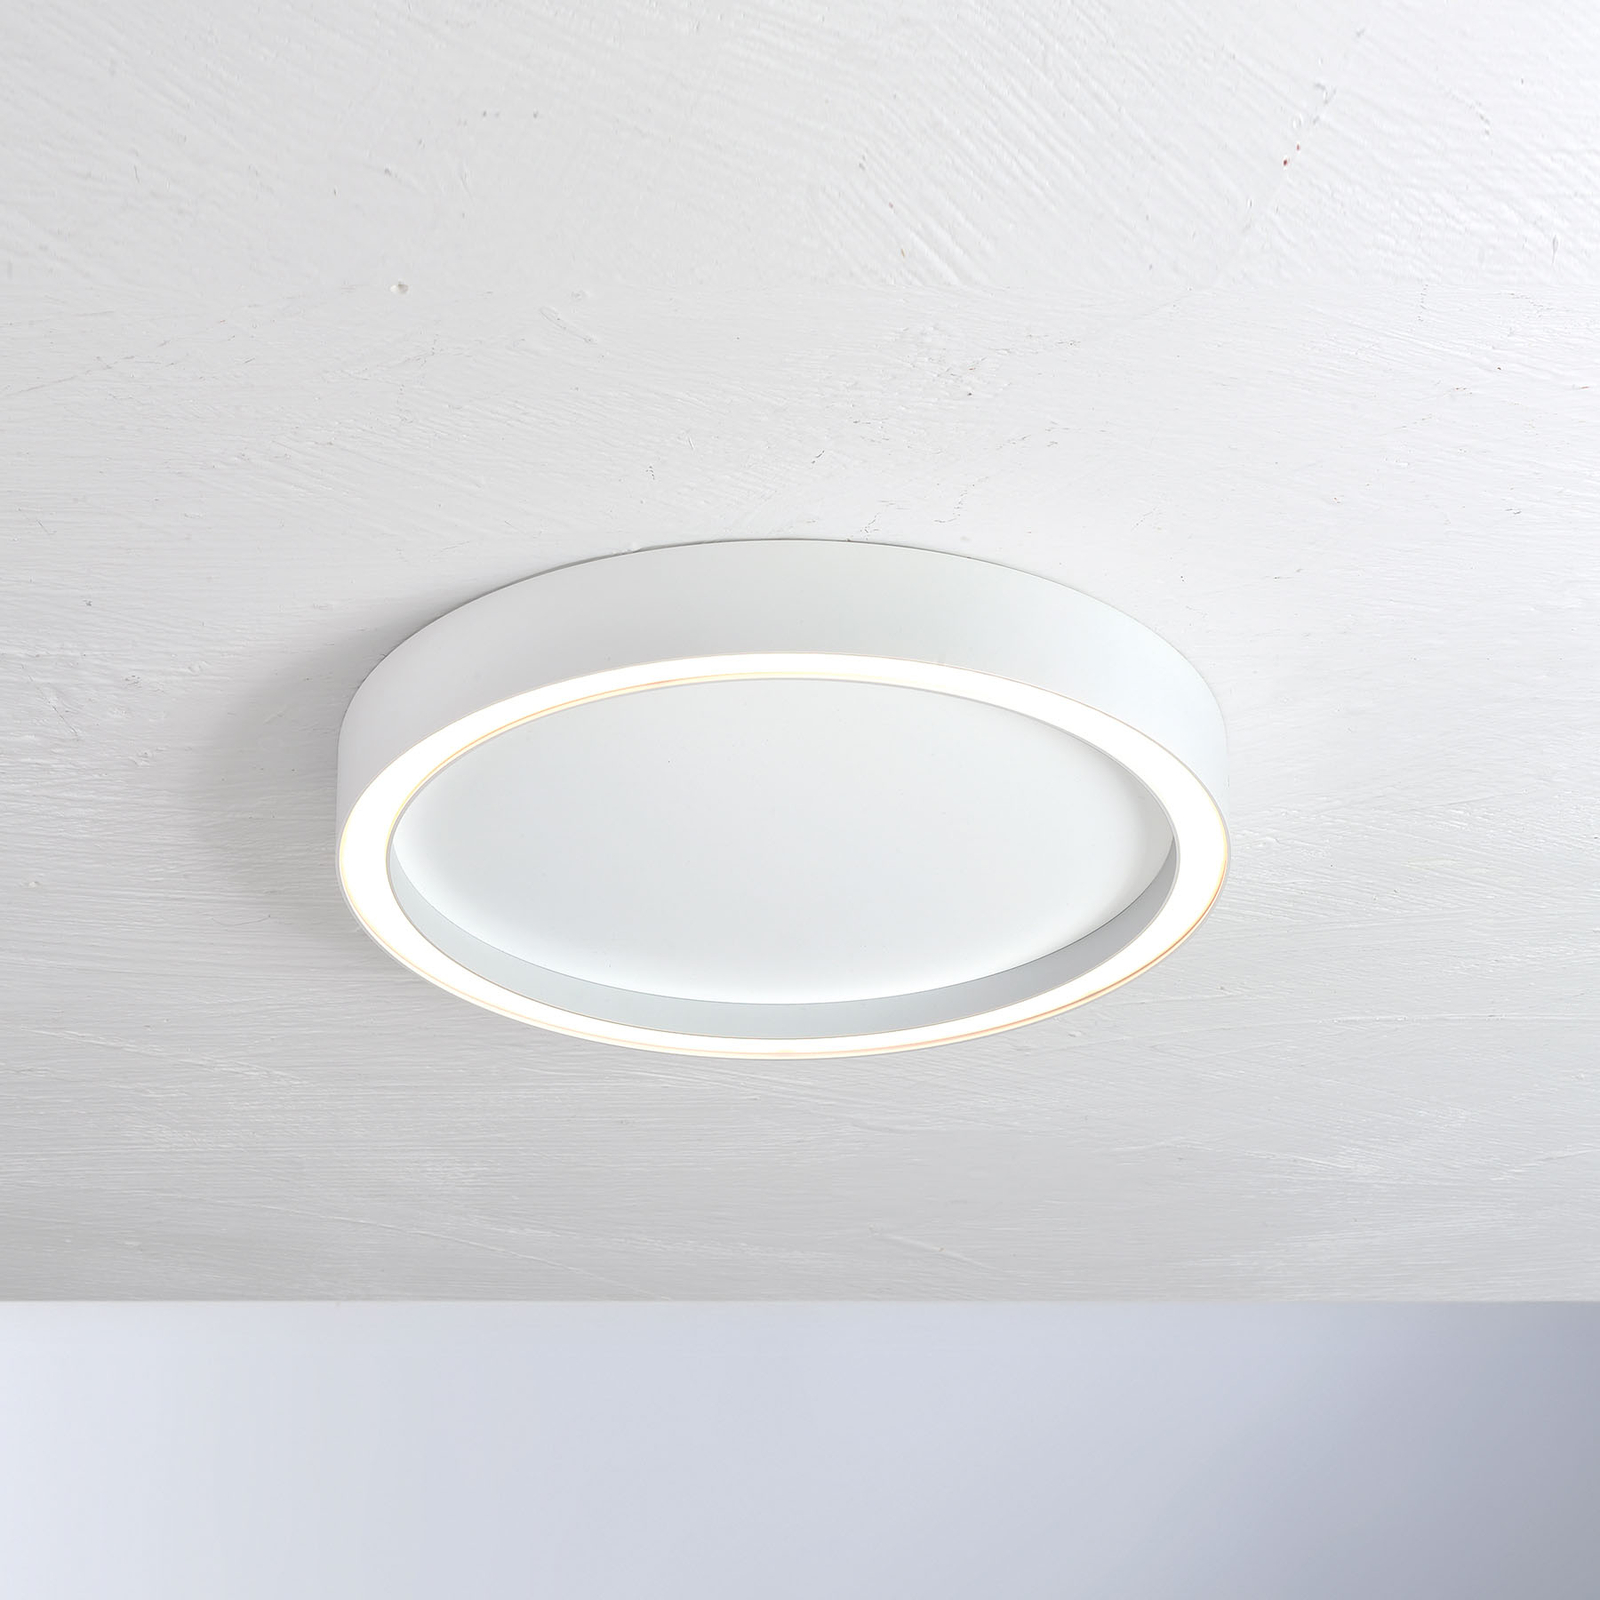 Stropní svítidlo Bopp Aura LED Ø 40 cm bílá/bílá